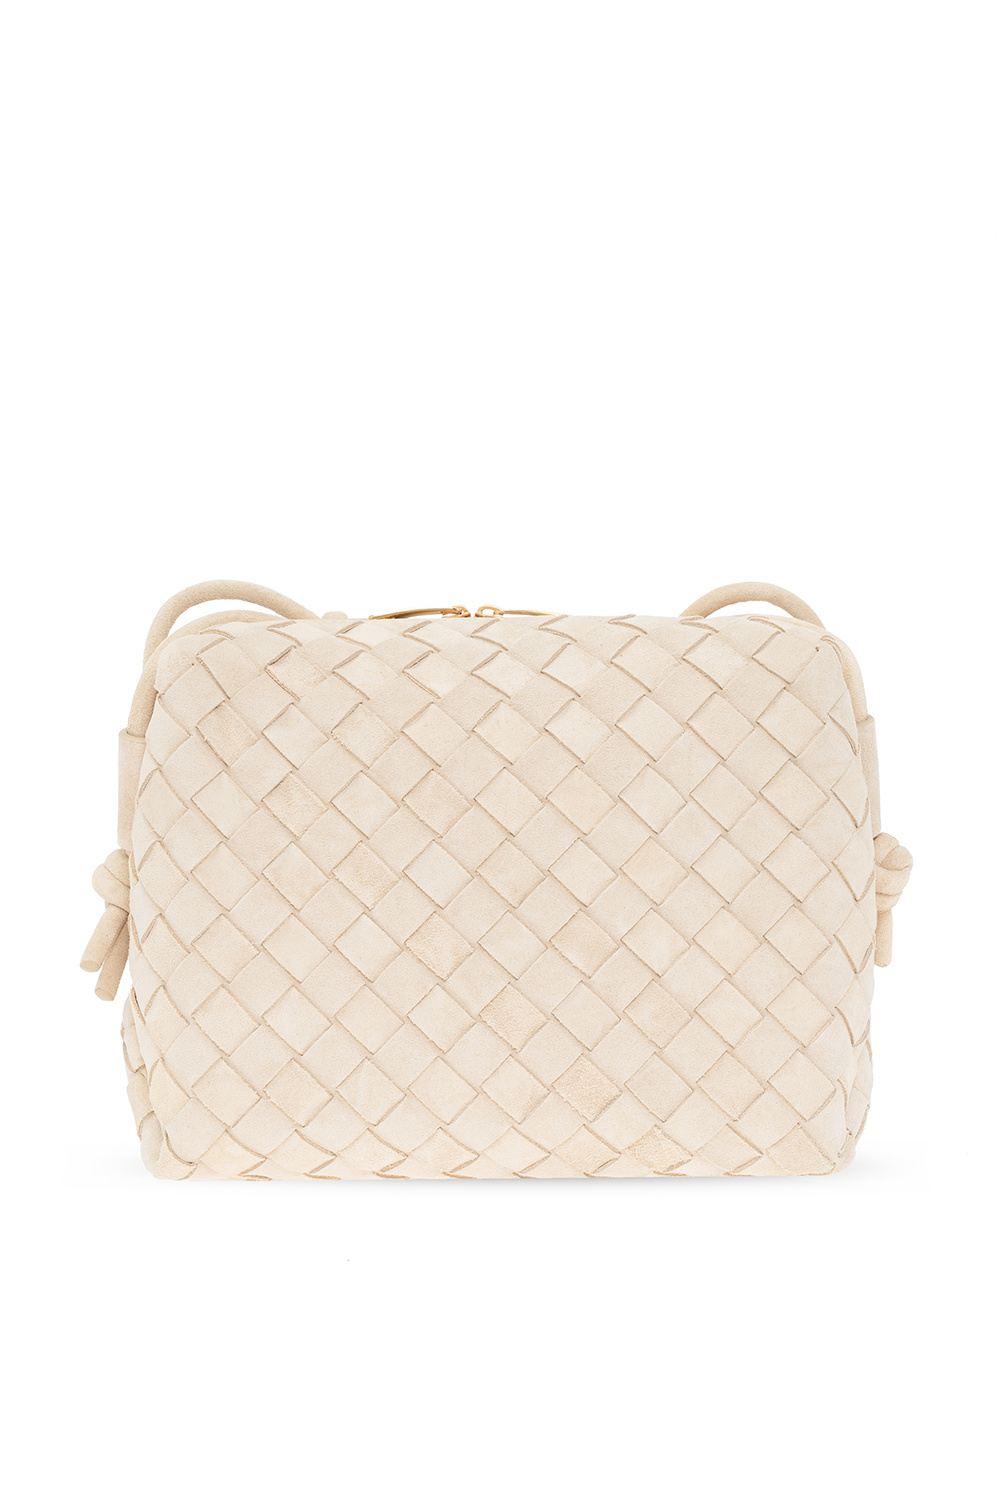 Bottega Veneta ‘Loop Small’ suede shoulder bag